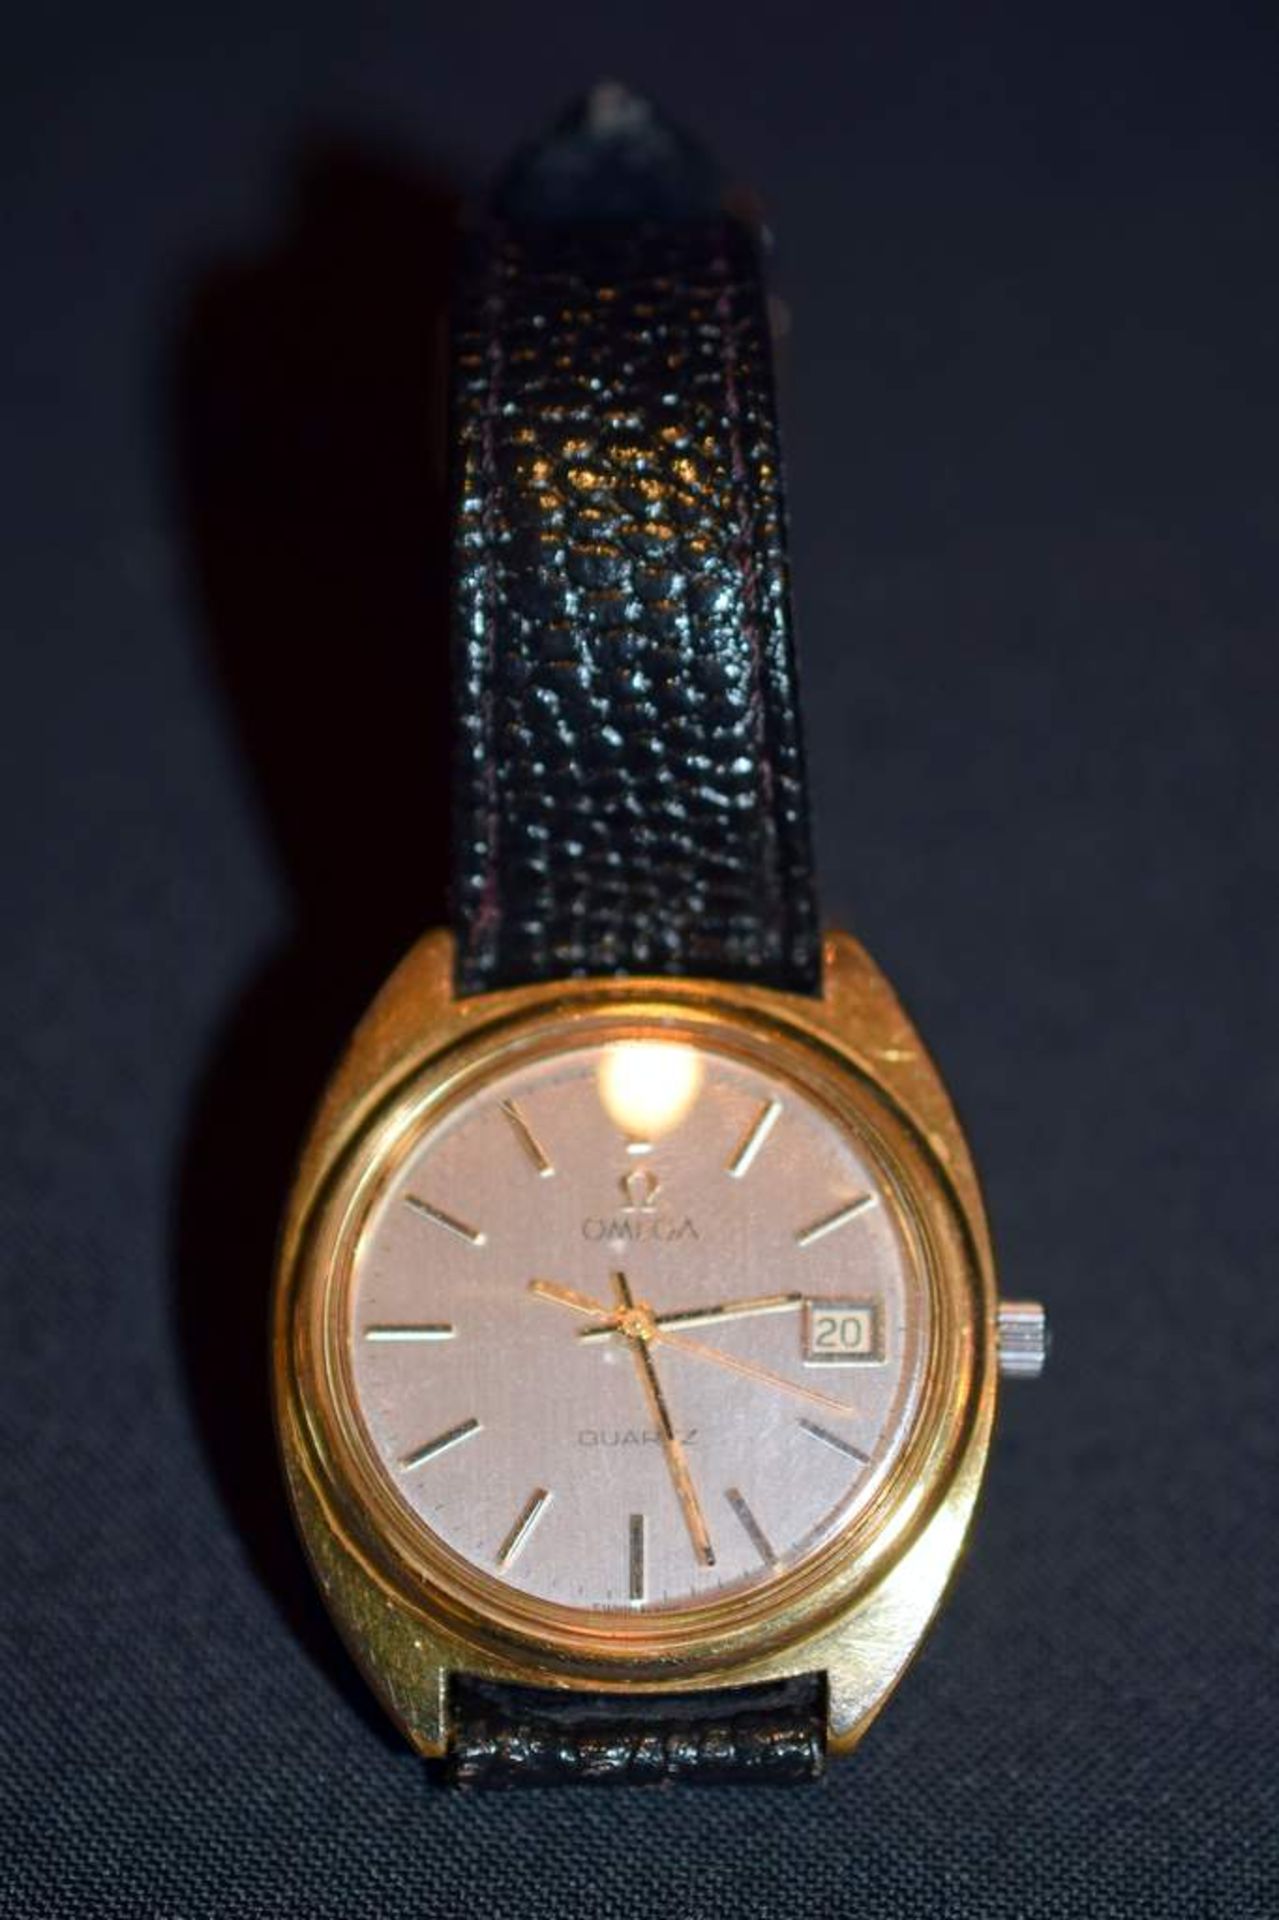 Gentleman's Omega Quartz Wristwatch Gold-Plated - Image 4 of 4